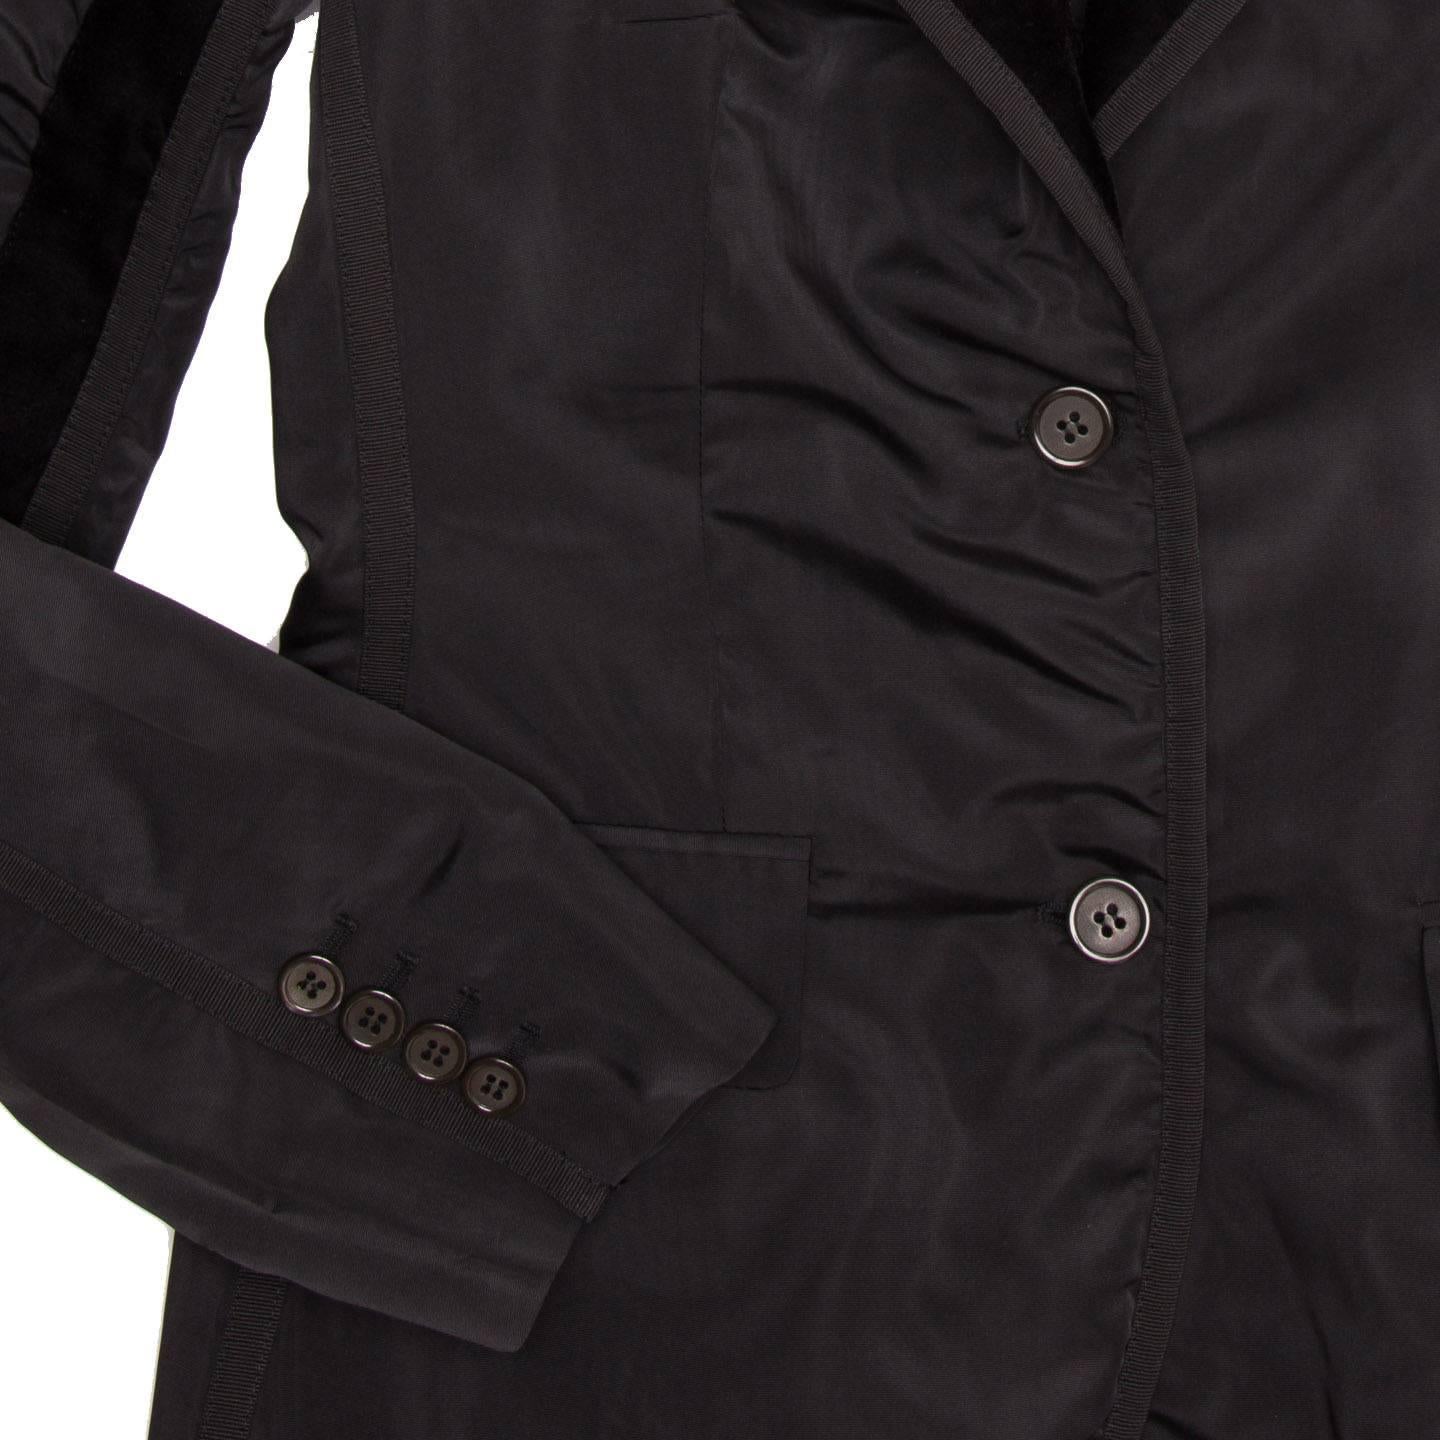 Yves Saint Laurent Black Silk Fitted Tuxedo Style Jacket For Sale 1